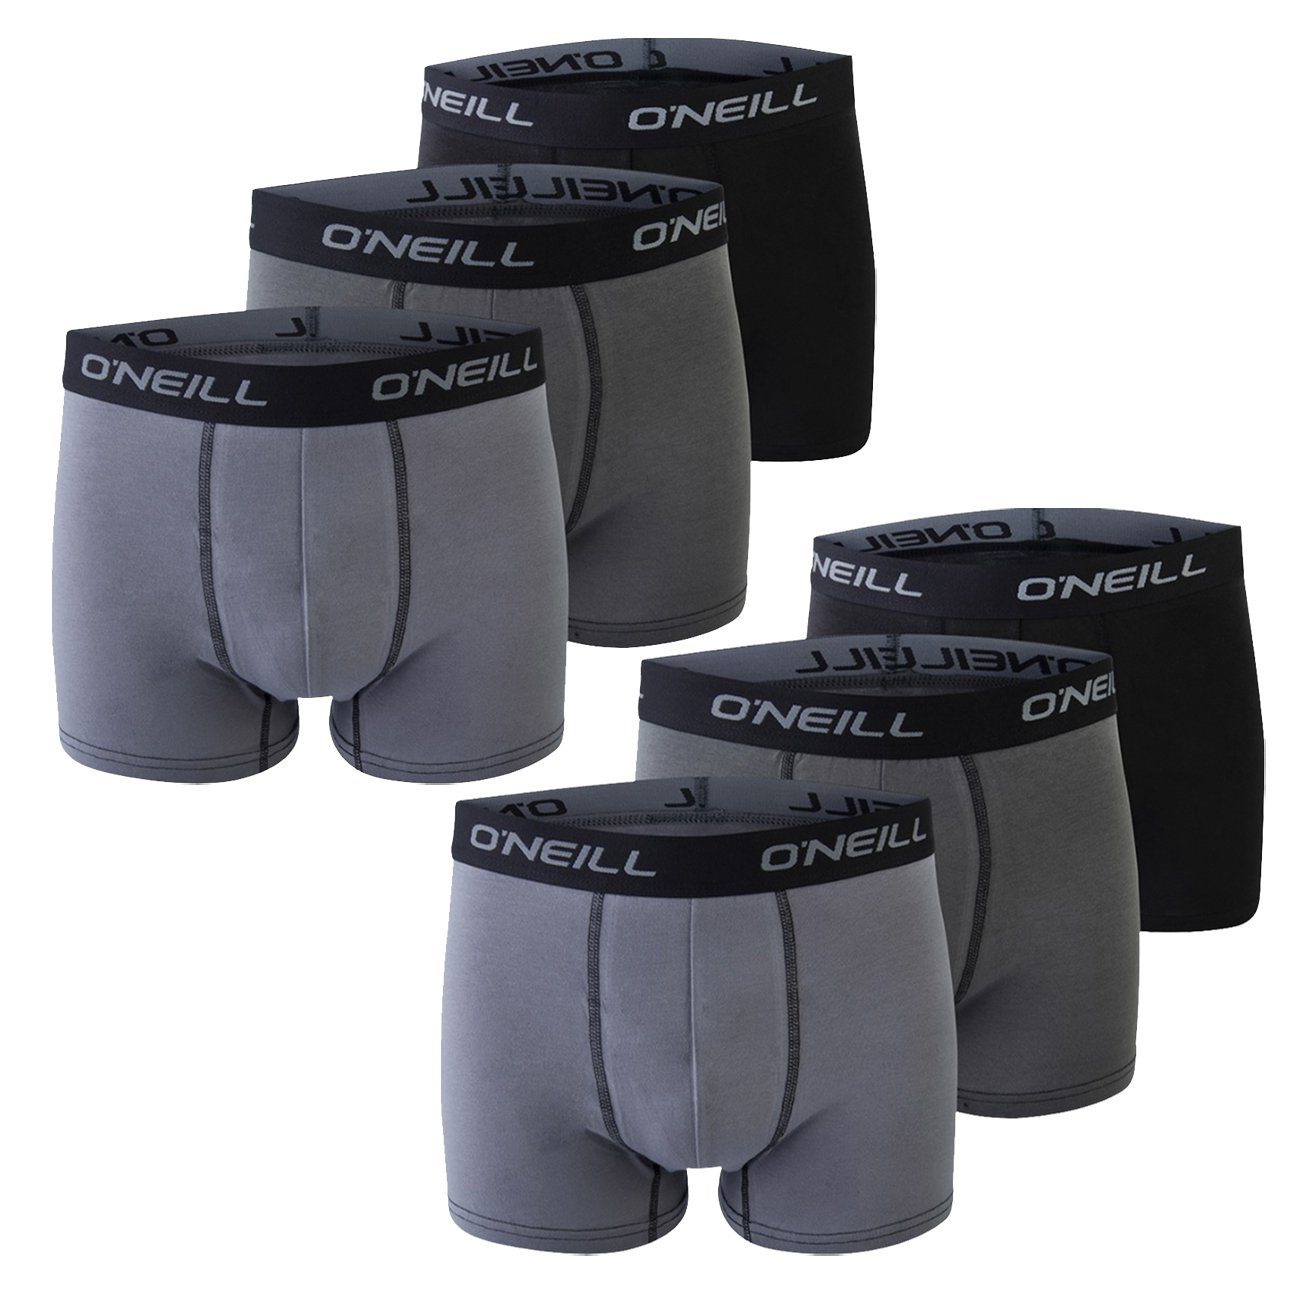 O'Neill Boxershorts Plain Topline 6er (6569P) (6-St) Pack 2x Grey mit Black Logo Webbund 4x